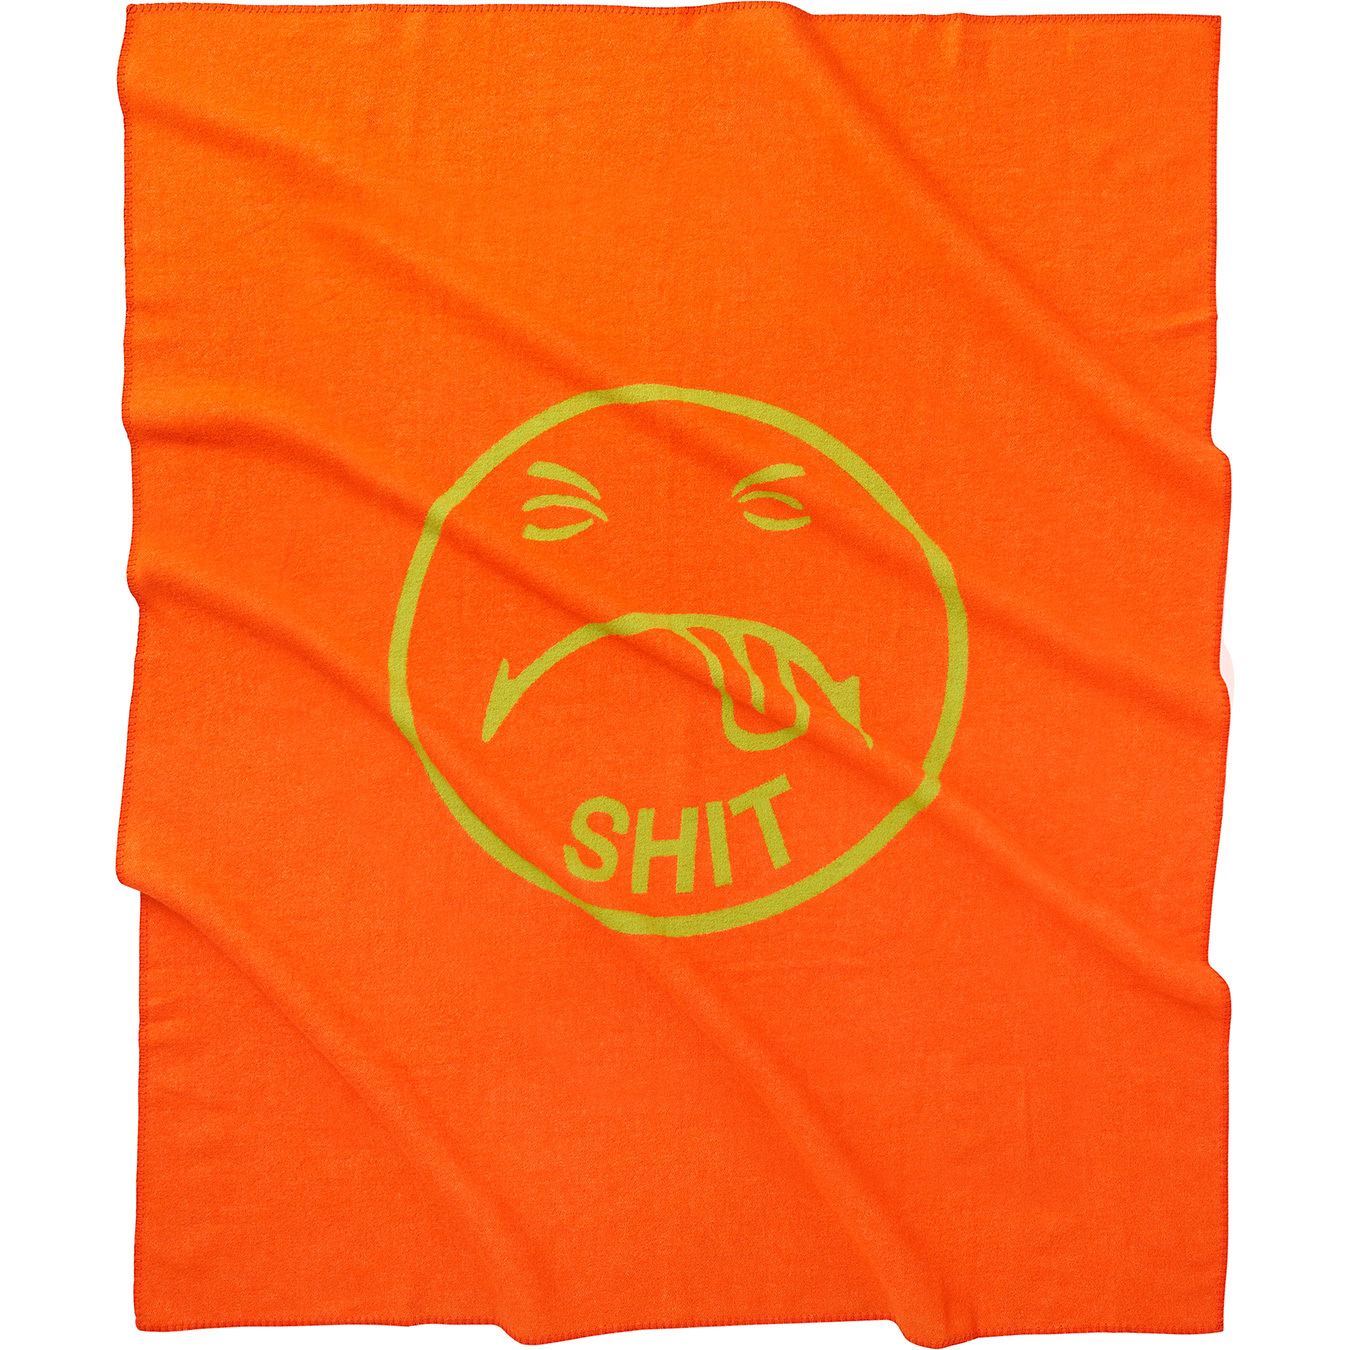 Supreme Woolrich Wool Throw Blanket Orange - FW17 - GB